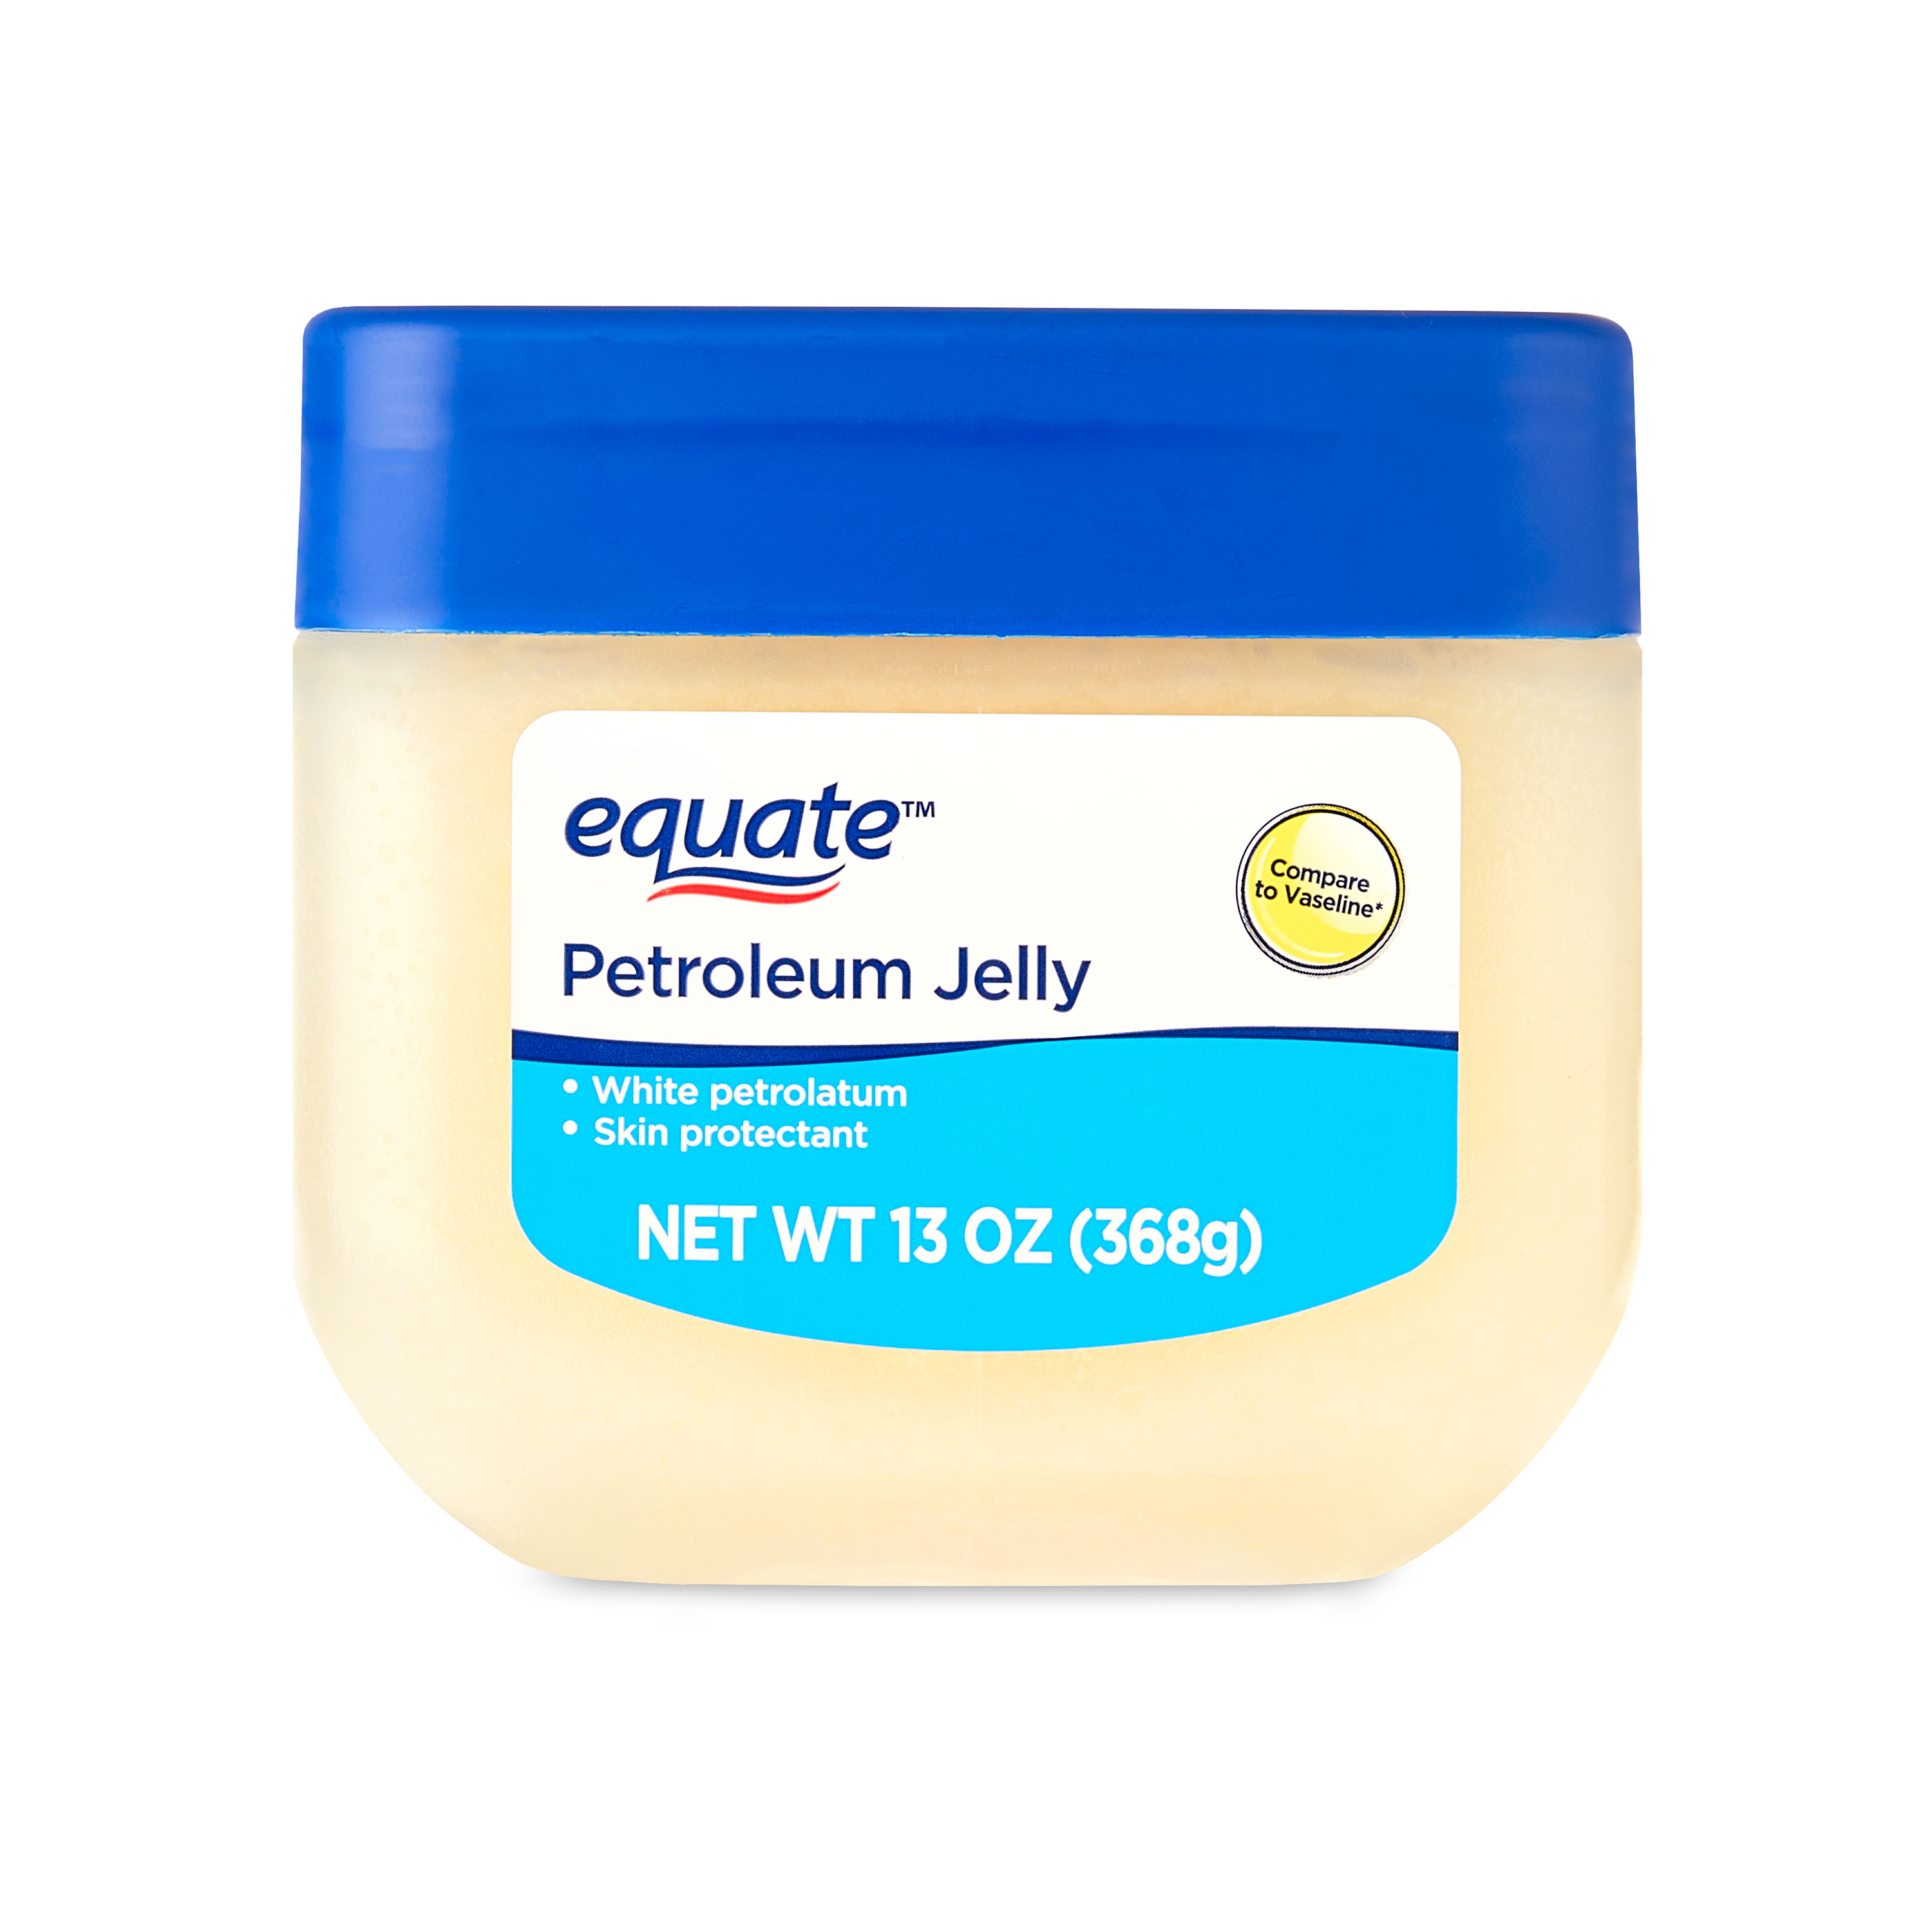 Equate 100% Pure Petroleum Jelly, 13 oz. - image 1 of 8